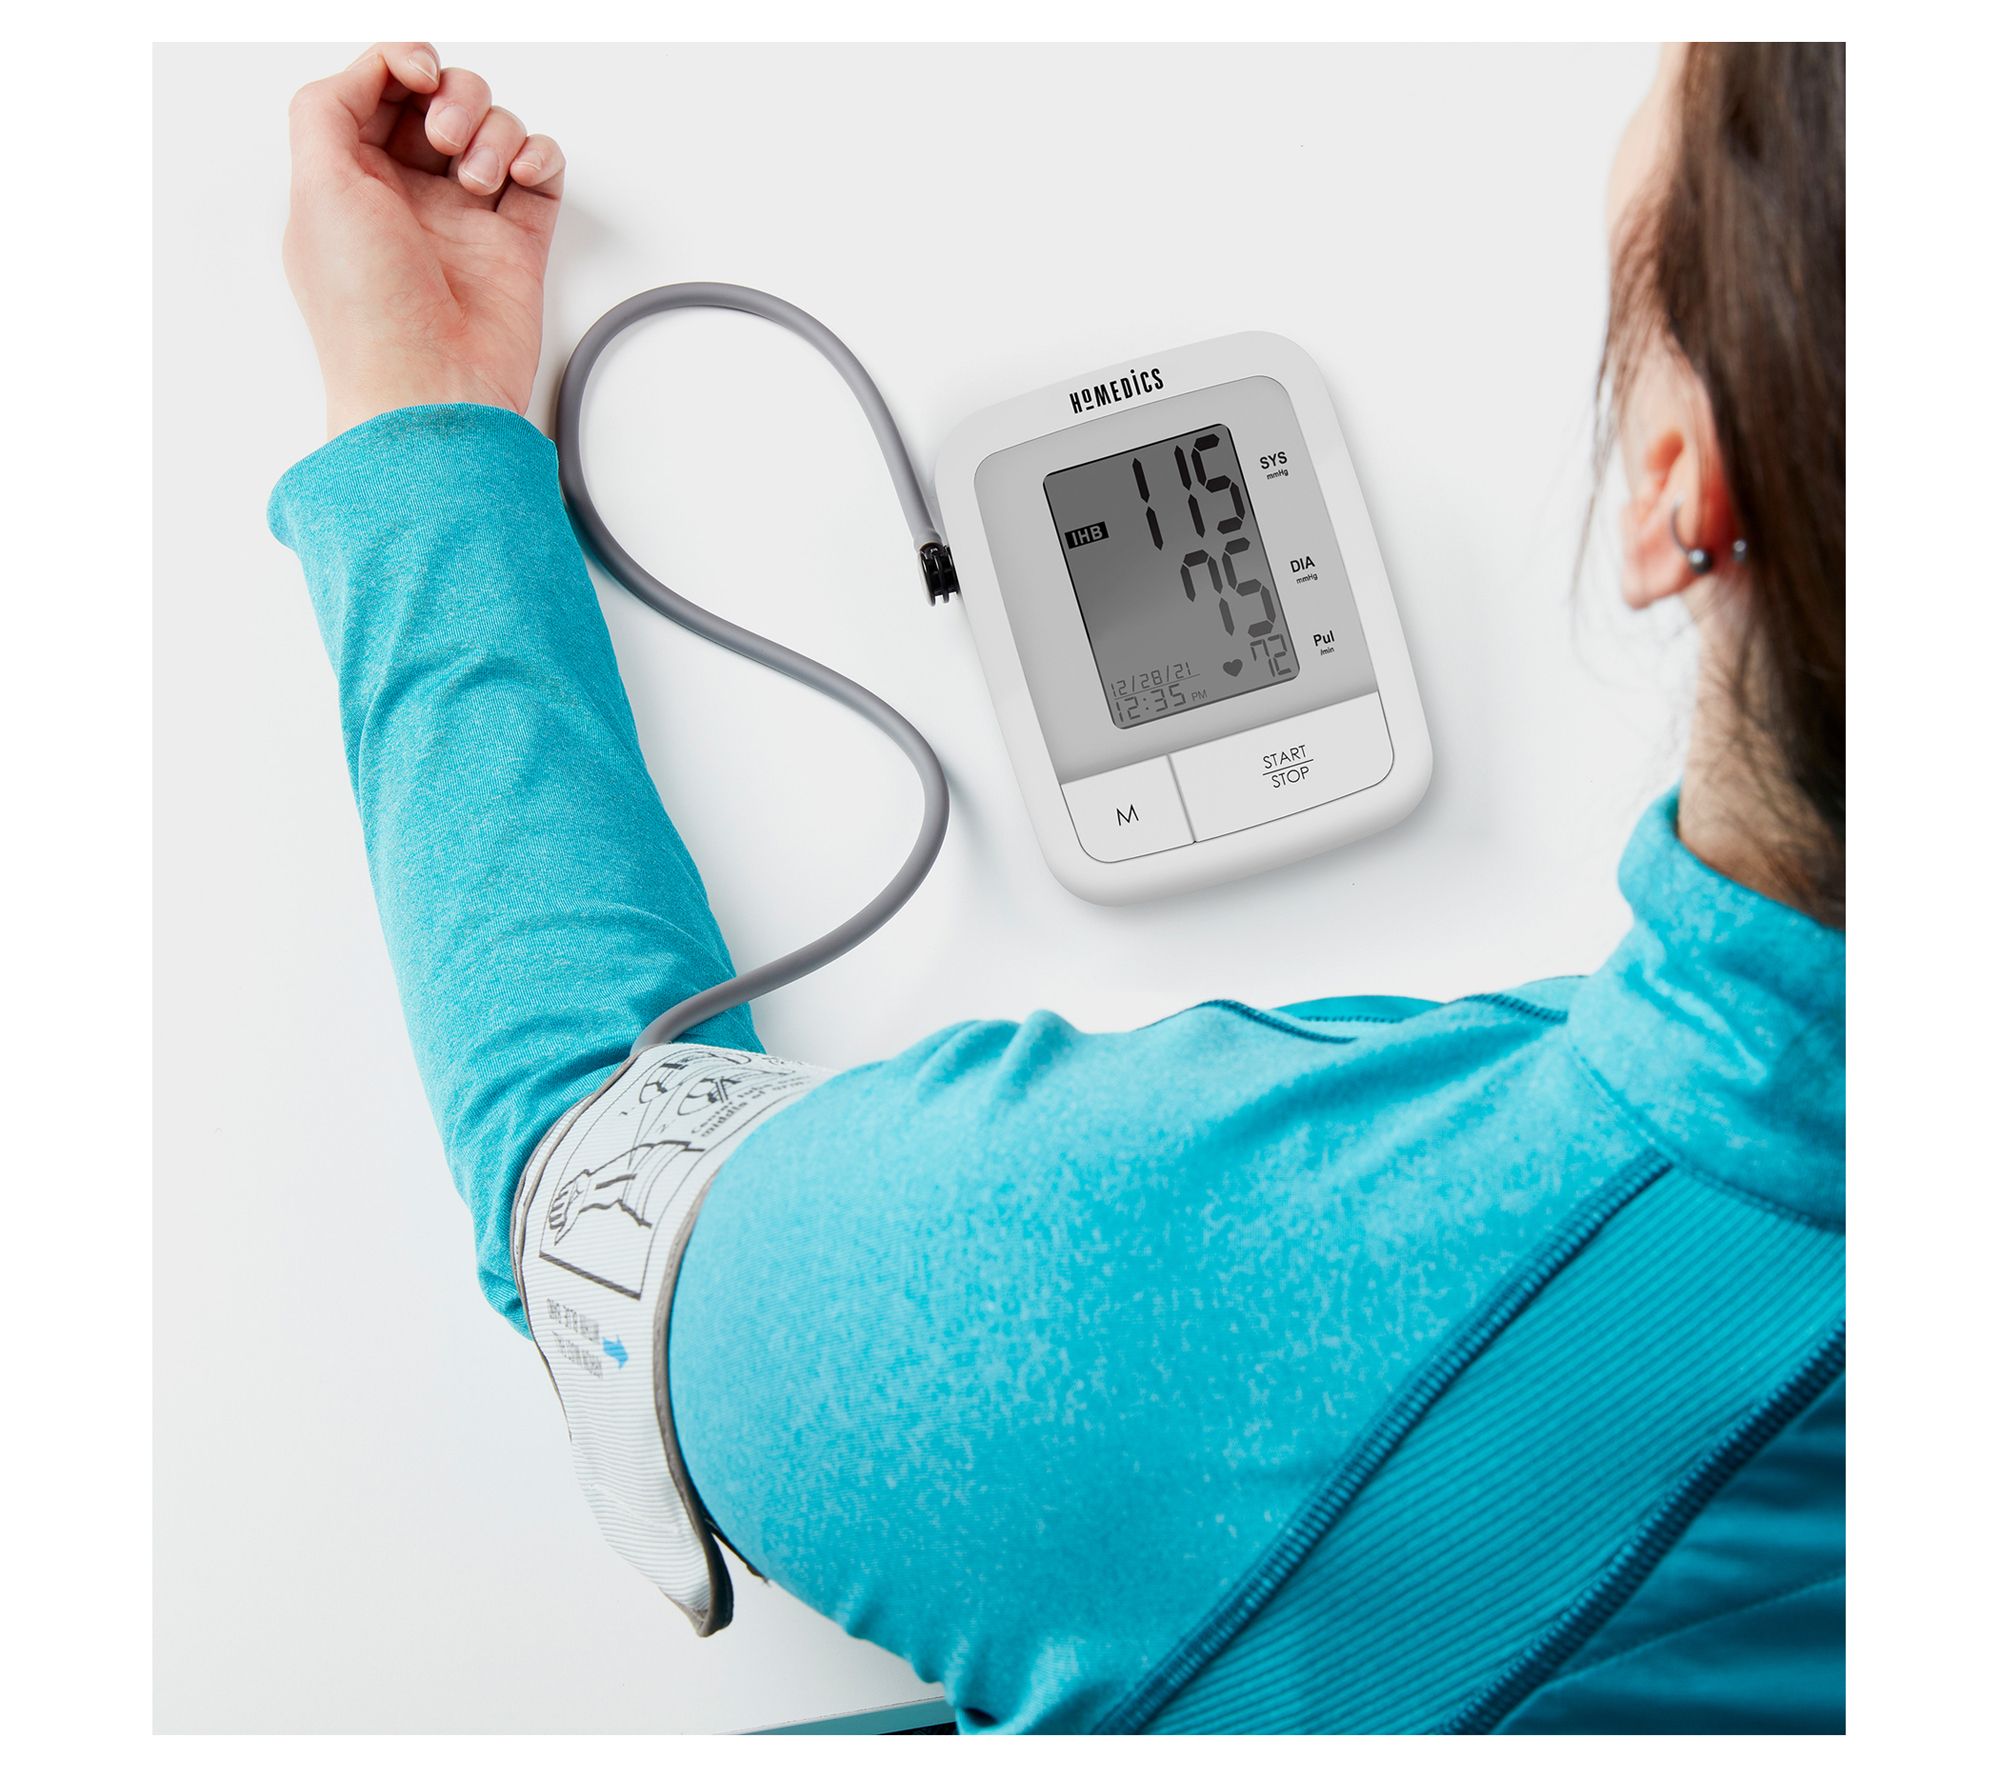 AC Adapter for Blood Pressure Monitors - HoMedics